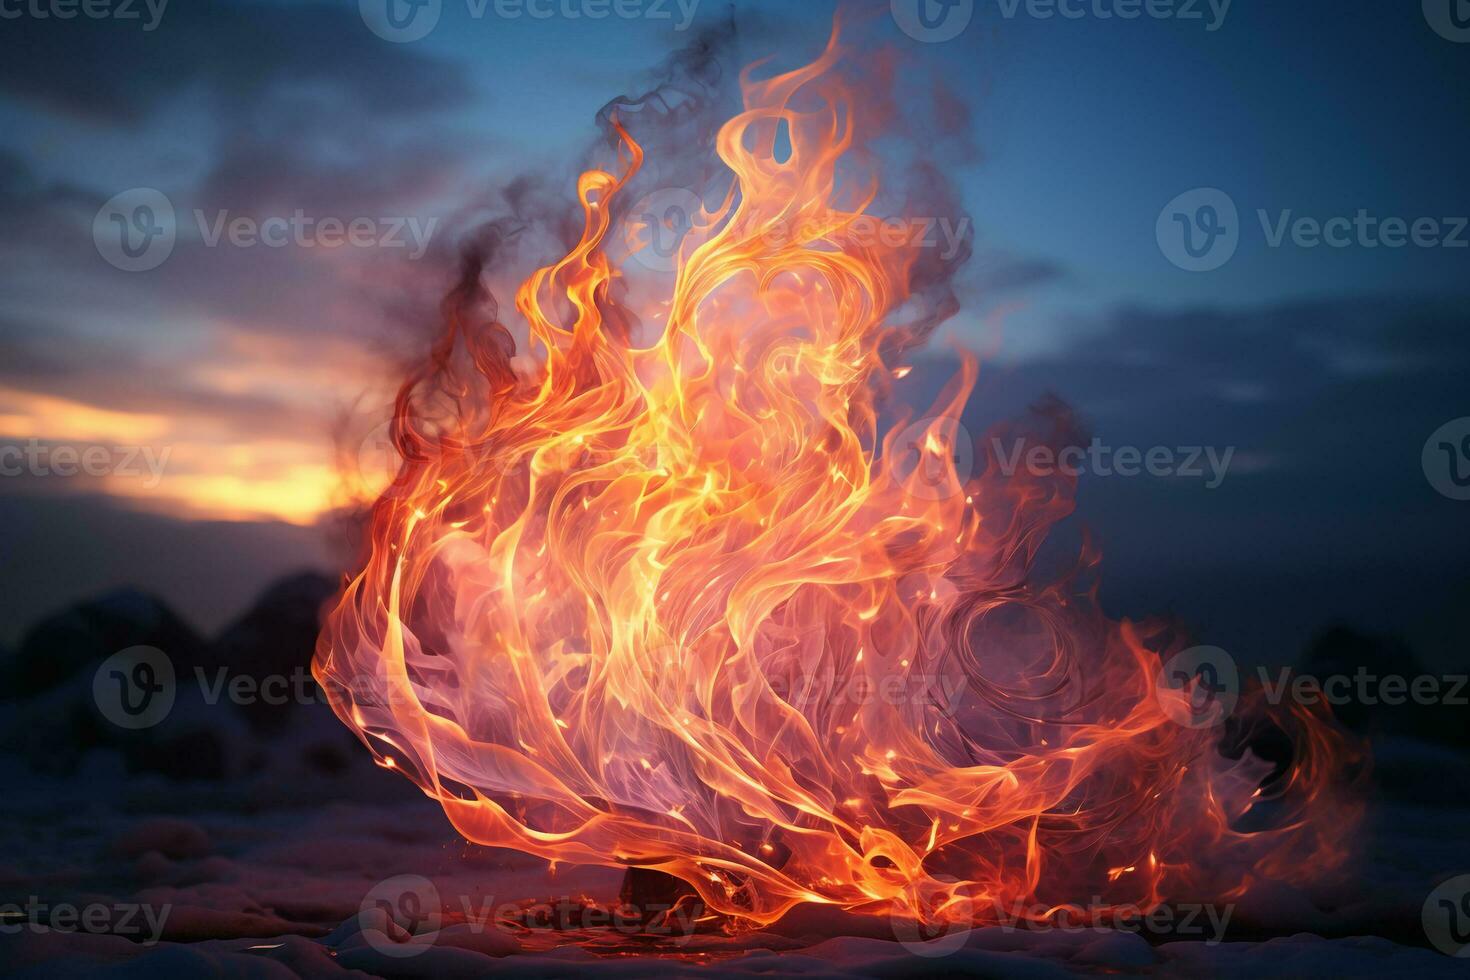 A frozen flame, long exposure photography. AI generative photo